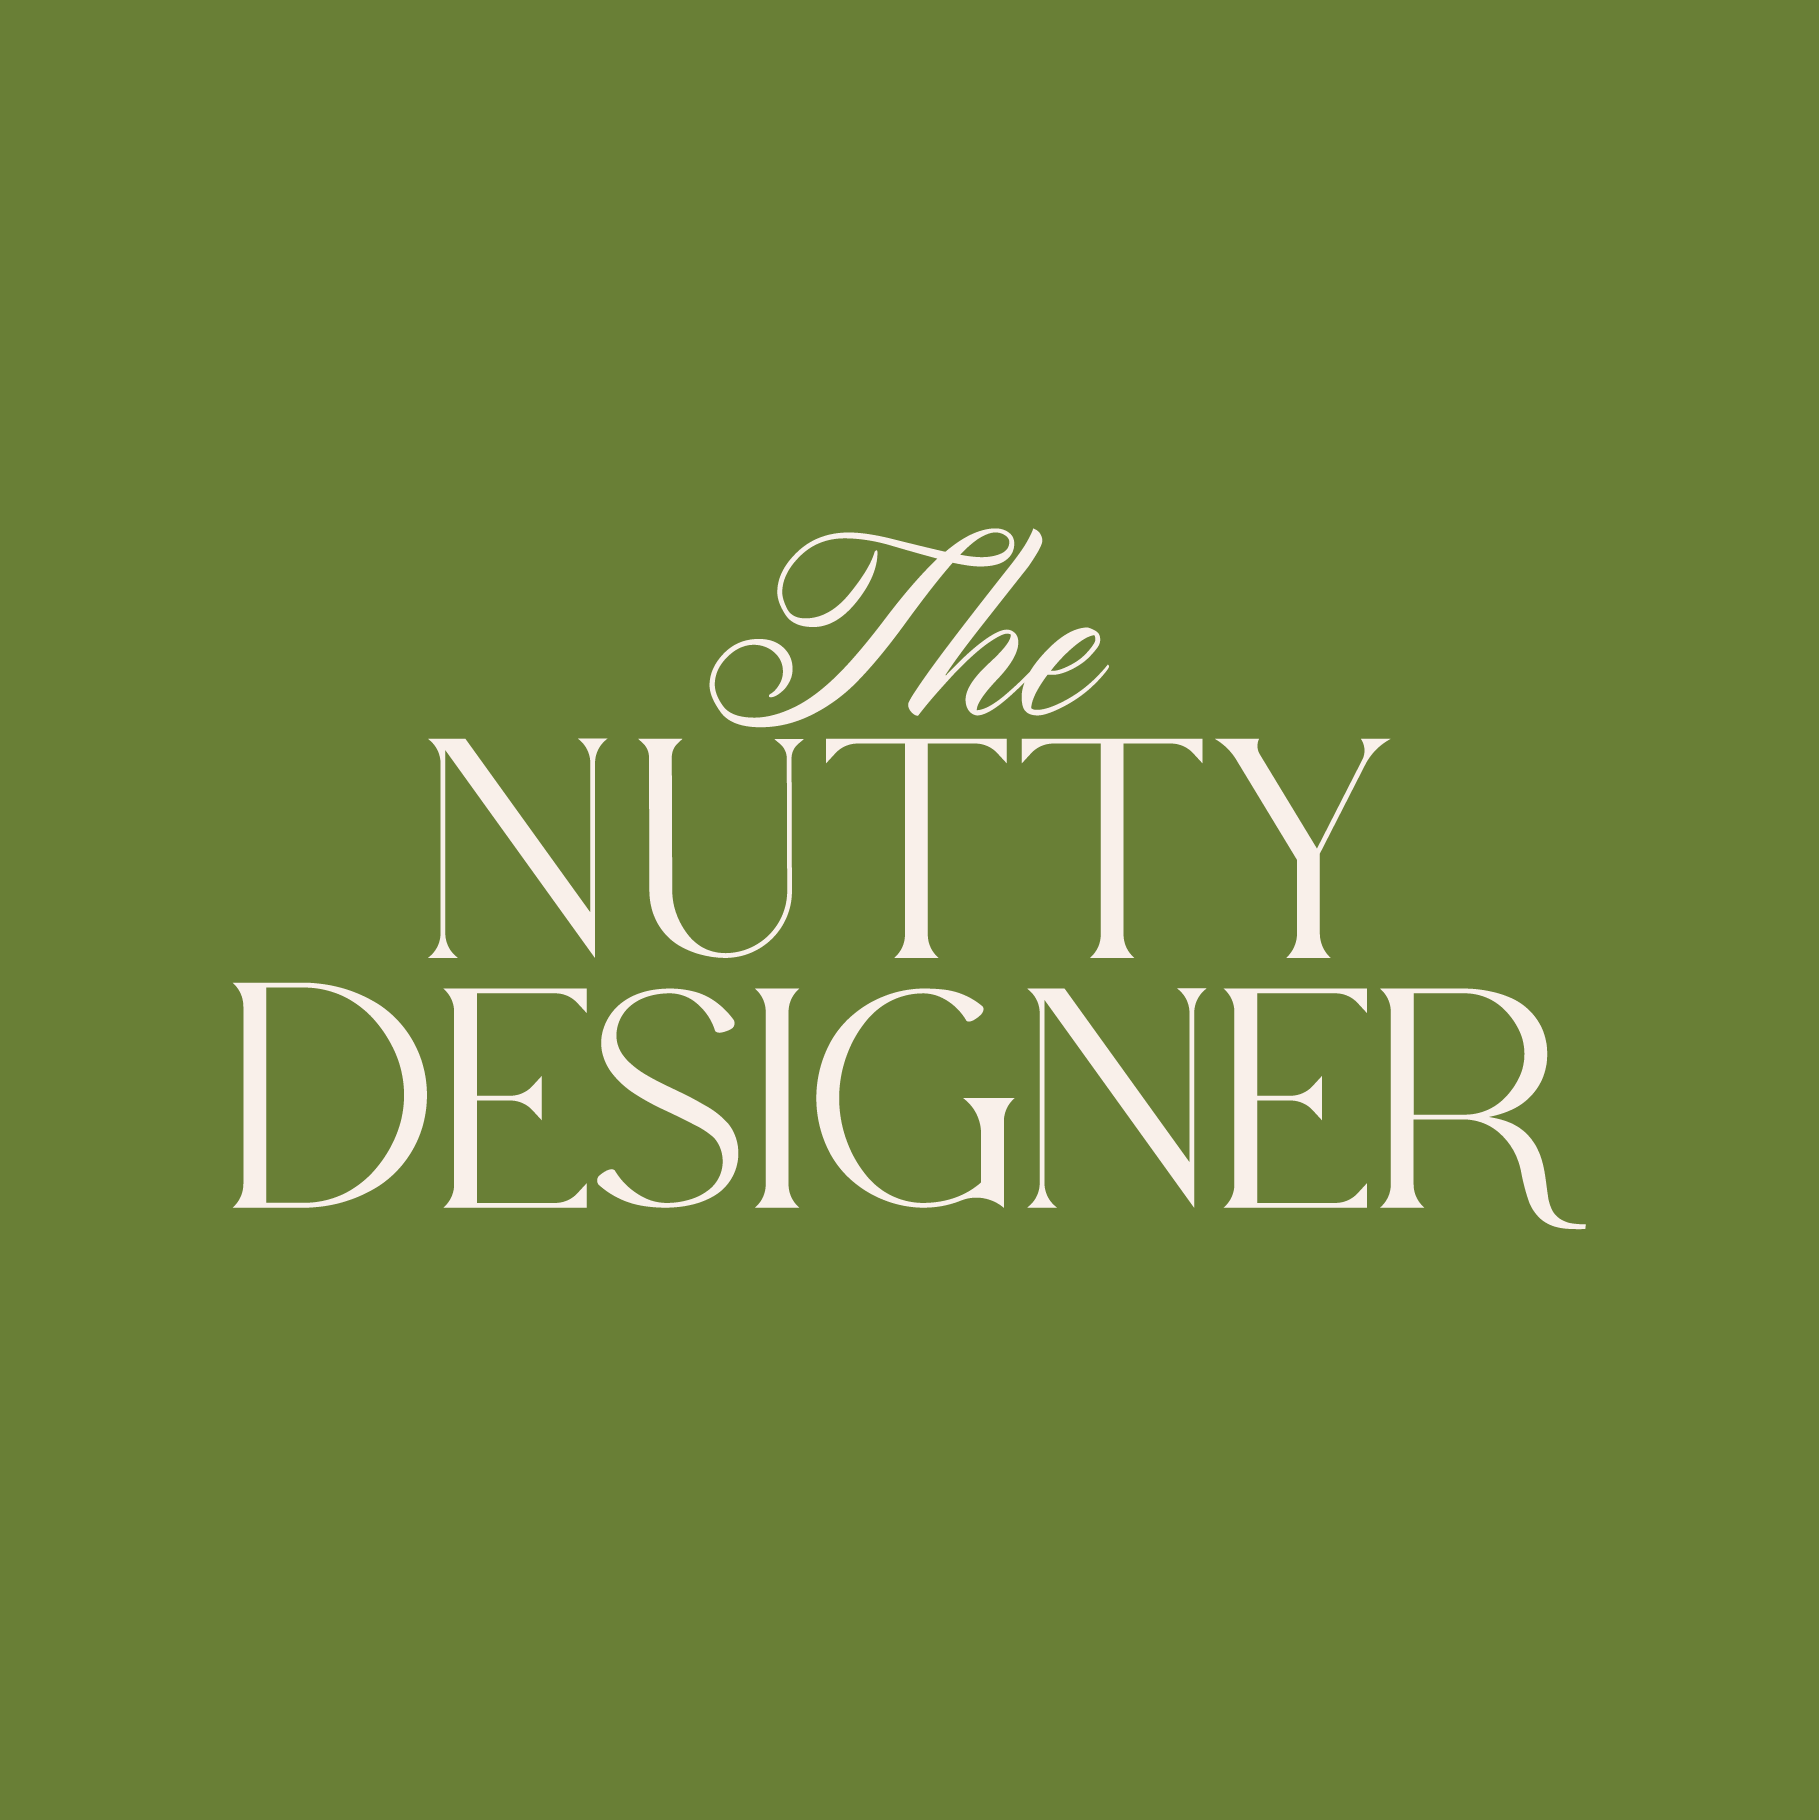 The Nutty Designer